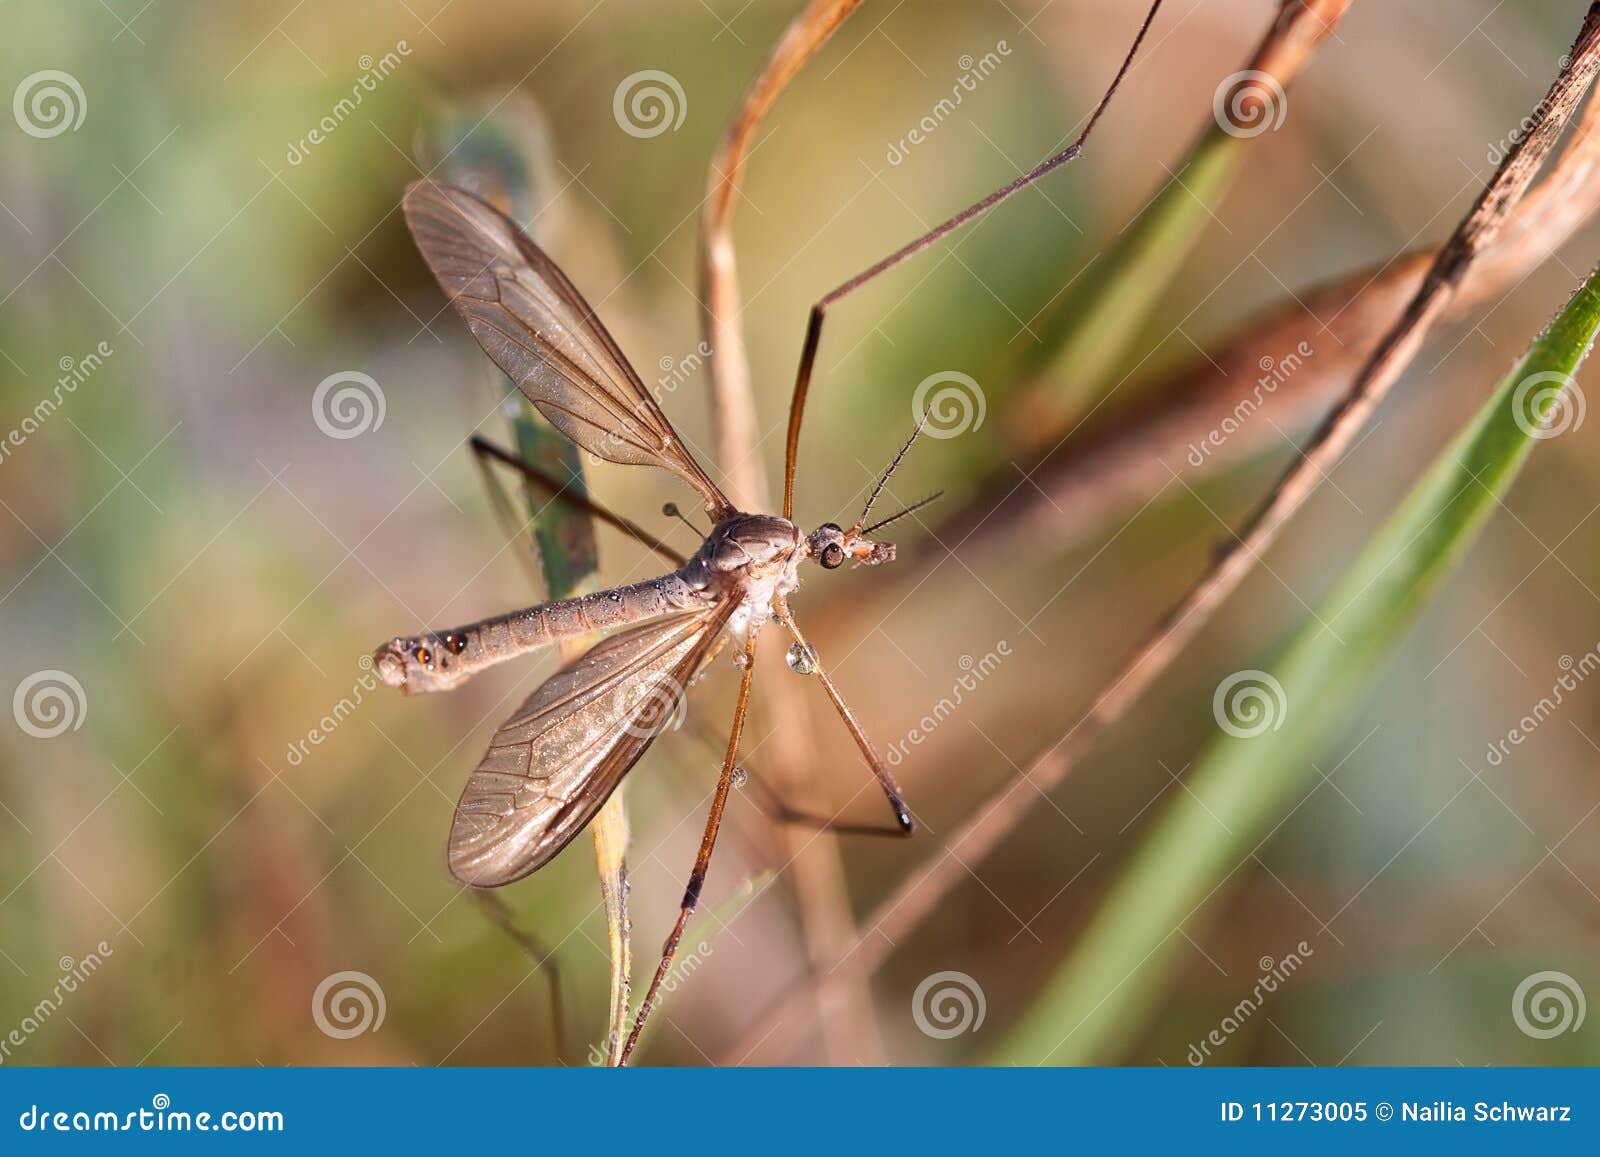 european large crane fly, tipula maxima